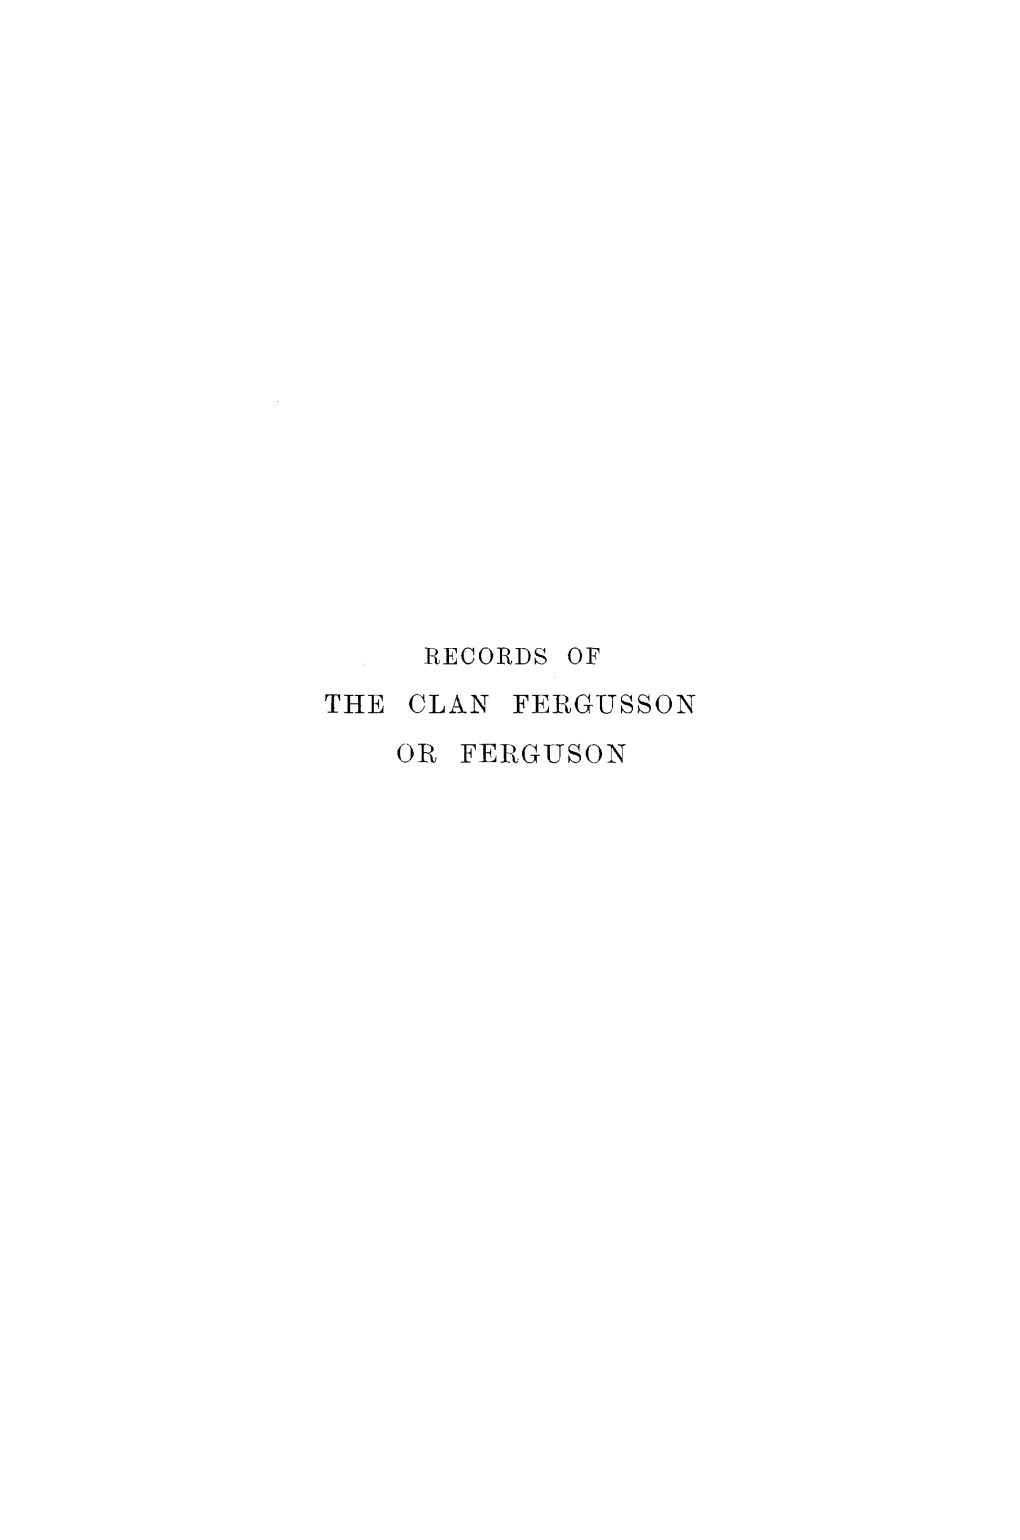 The Clan Fergusson Or Ferguson